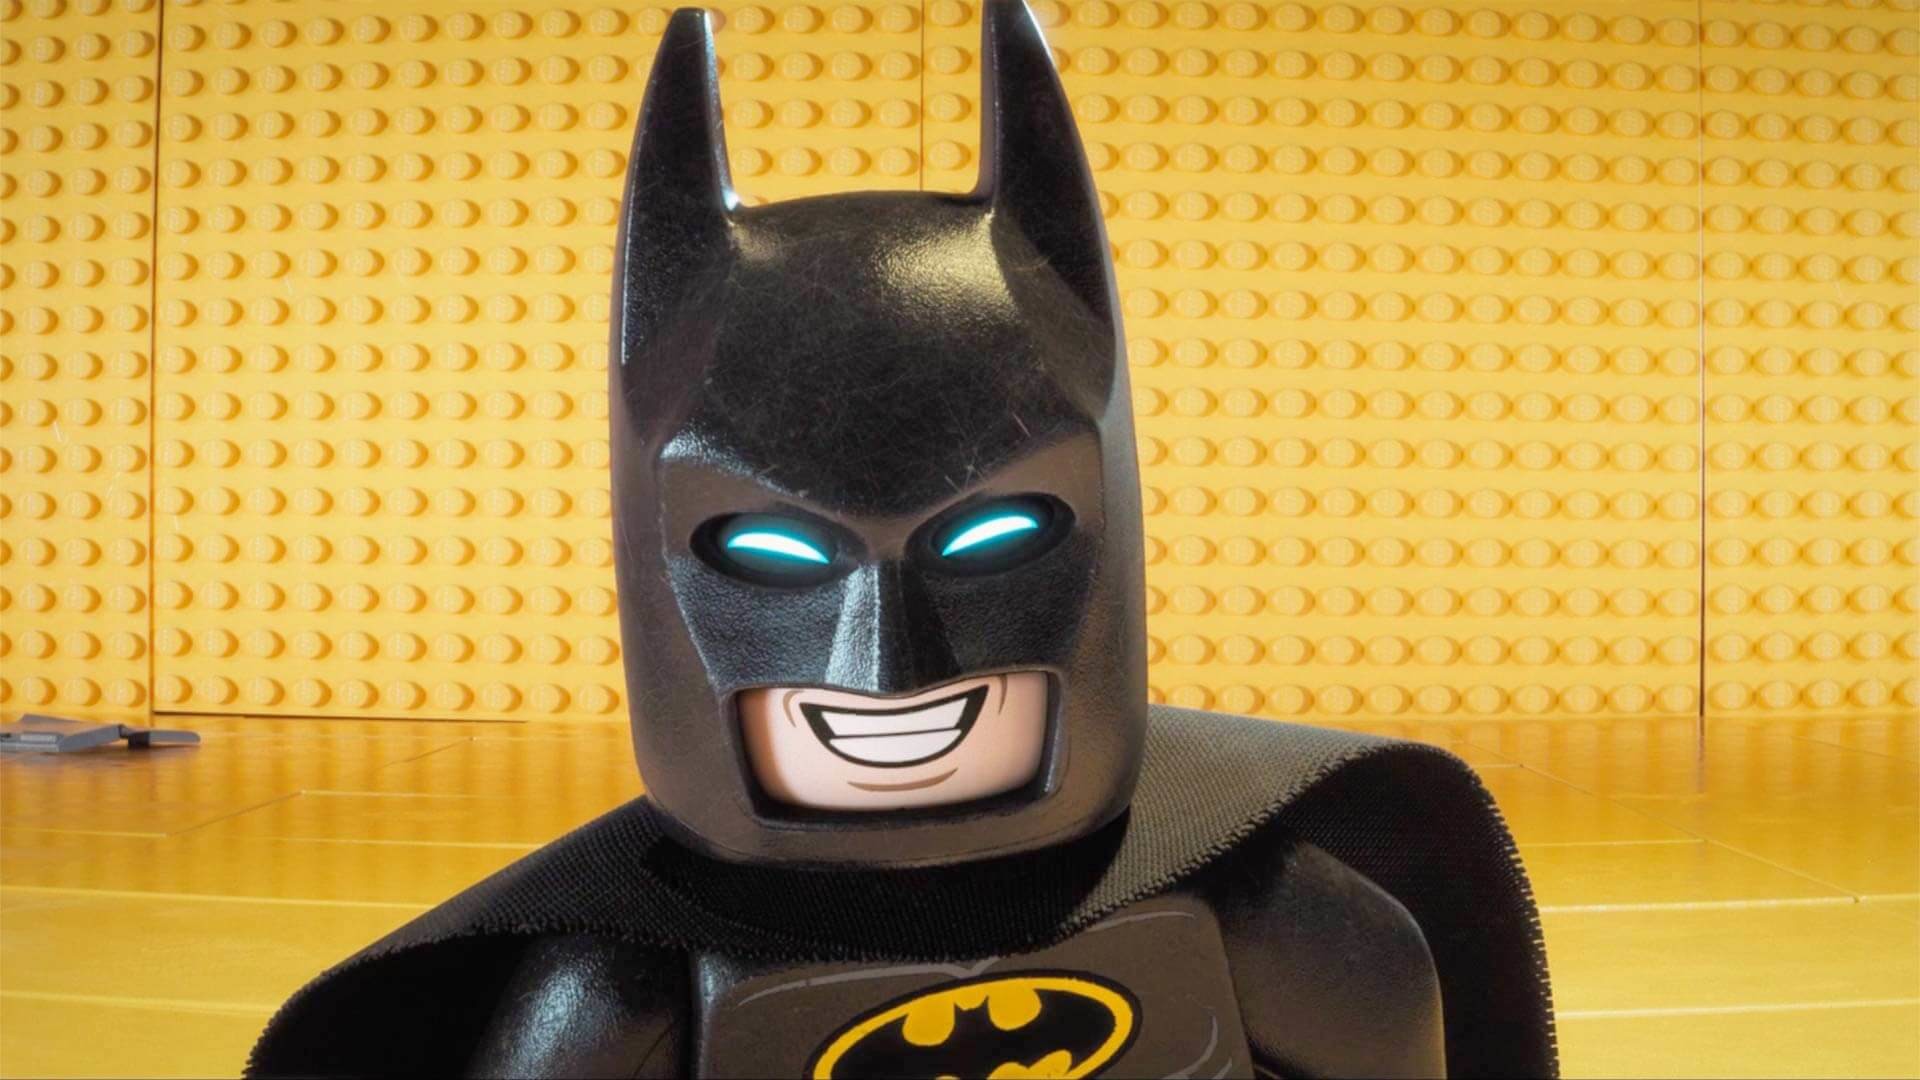 Download The Lego Batman Movie's Batman's Whole-Body Photo Wallpaper